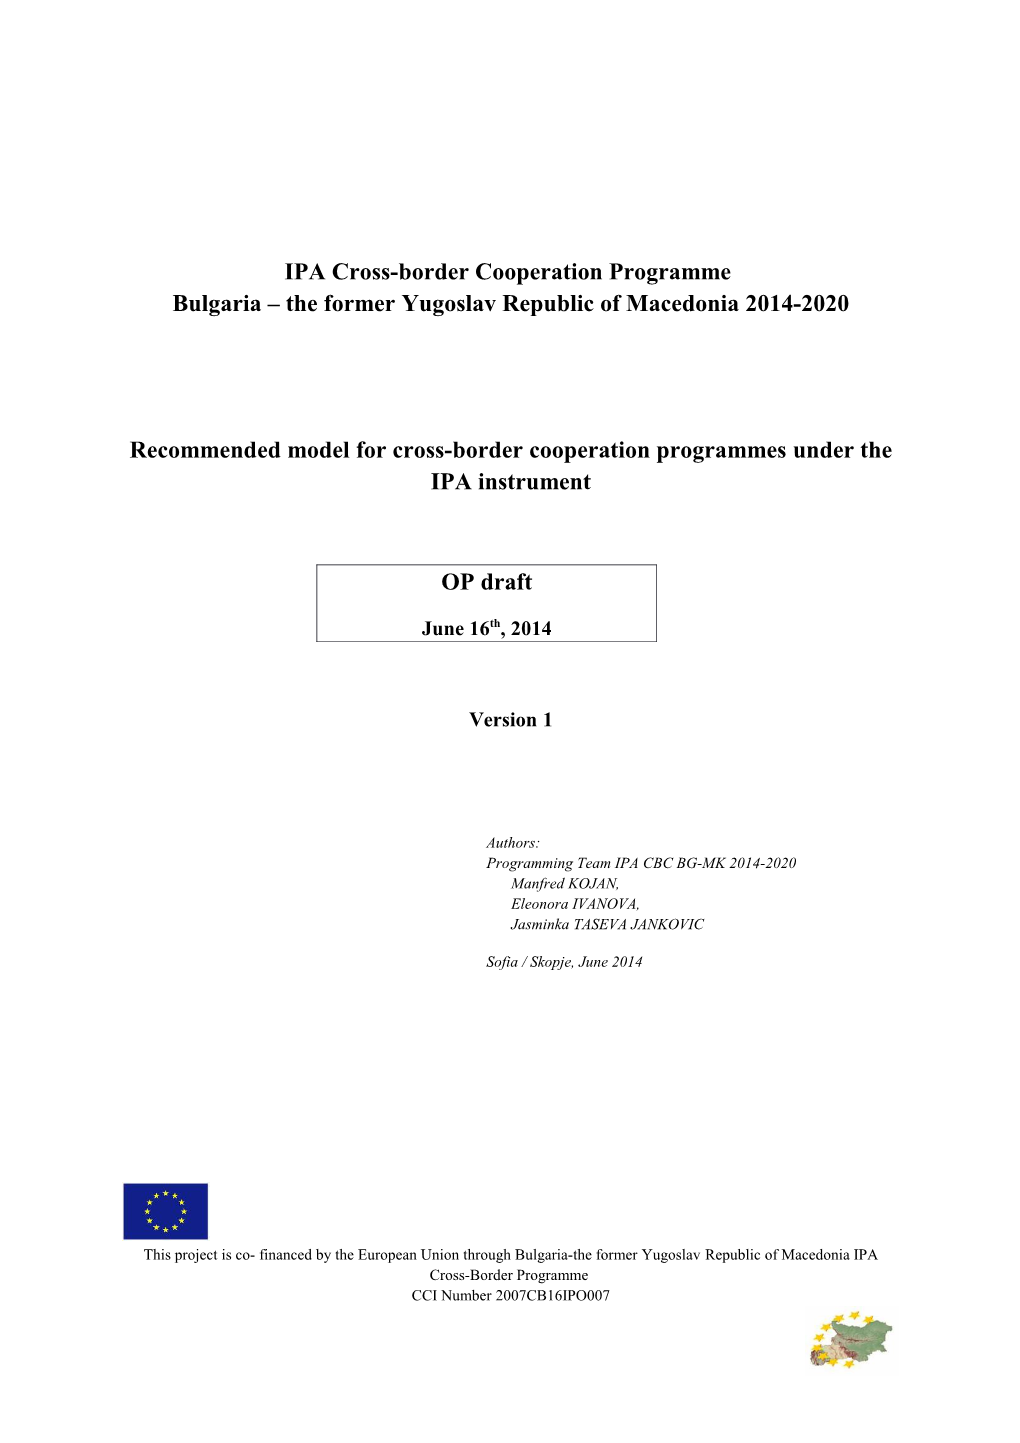 IPA II CBC Programme BG-MK 2014-2020OP Draft 16.06.2014